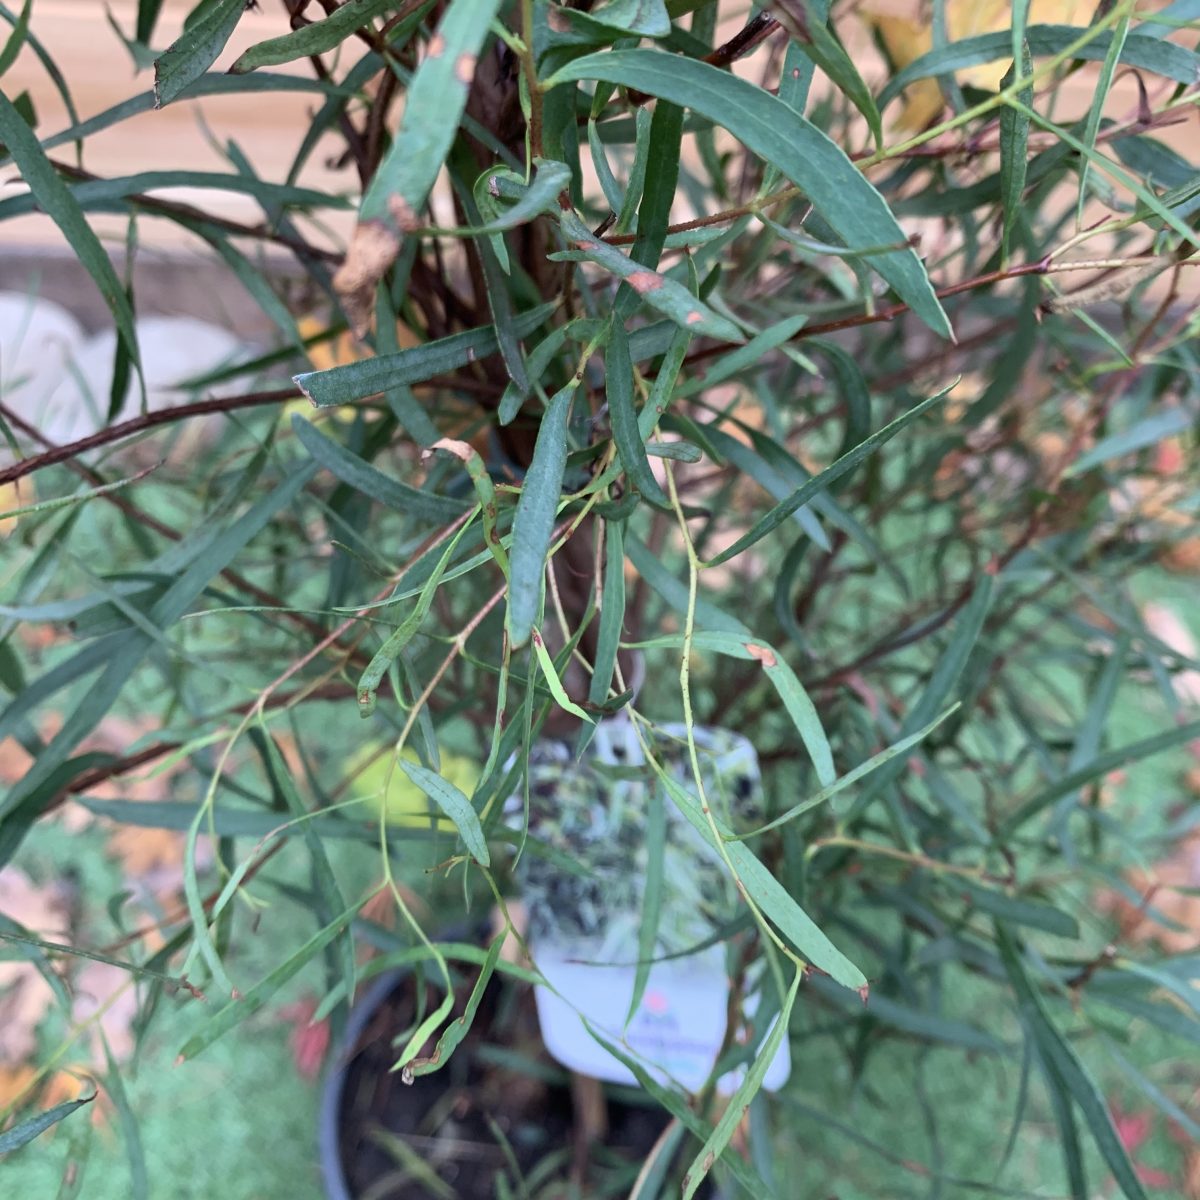 Евкаліпт Eucalyptus pulchella